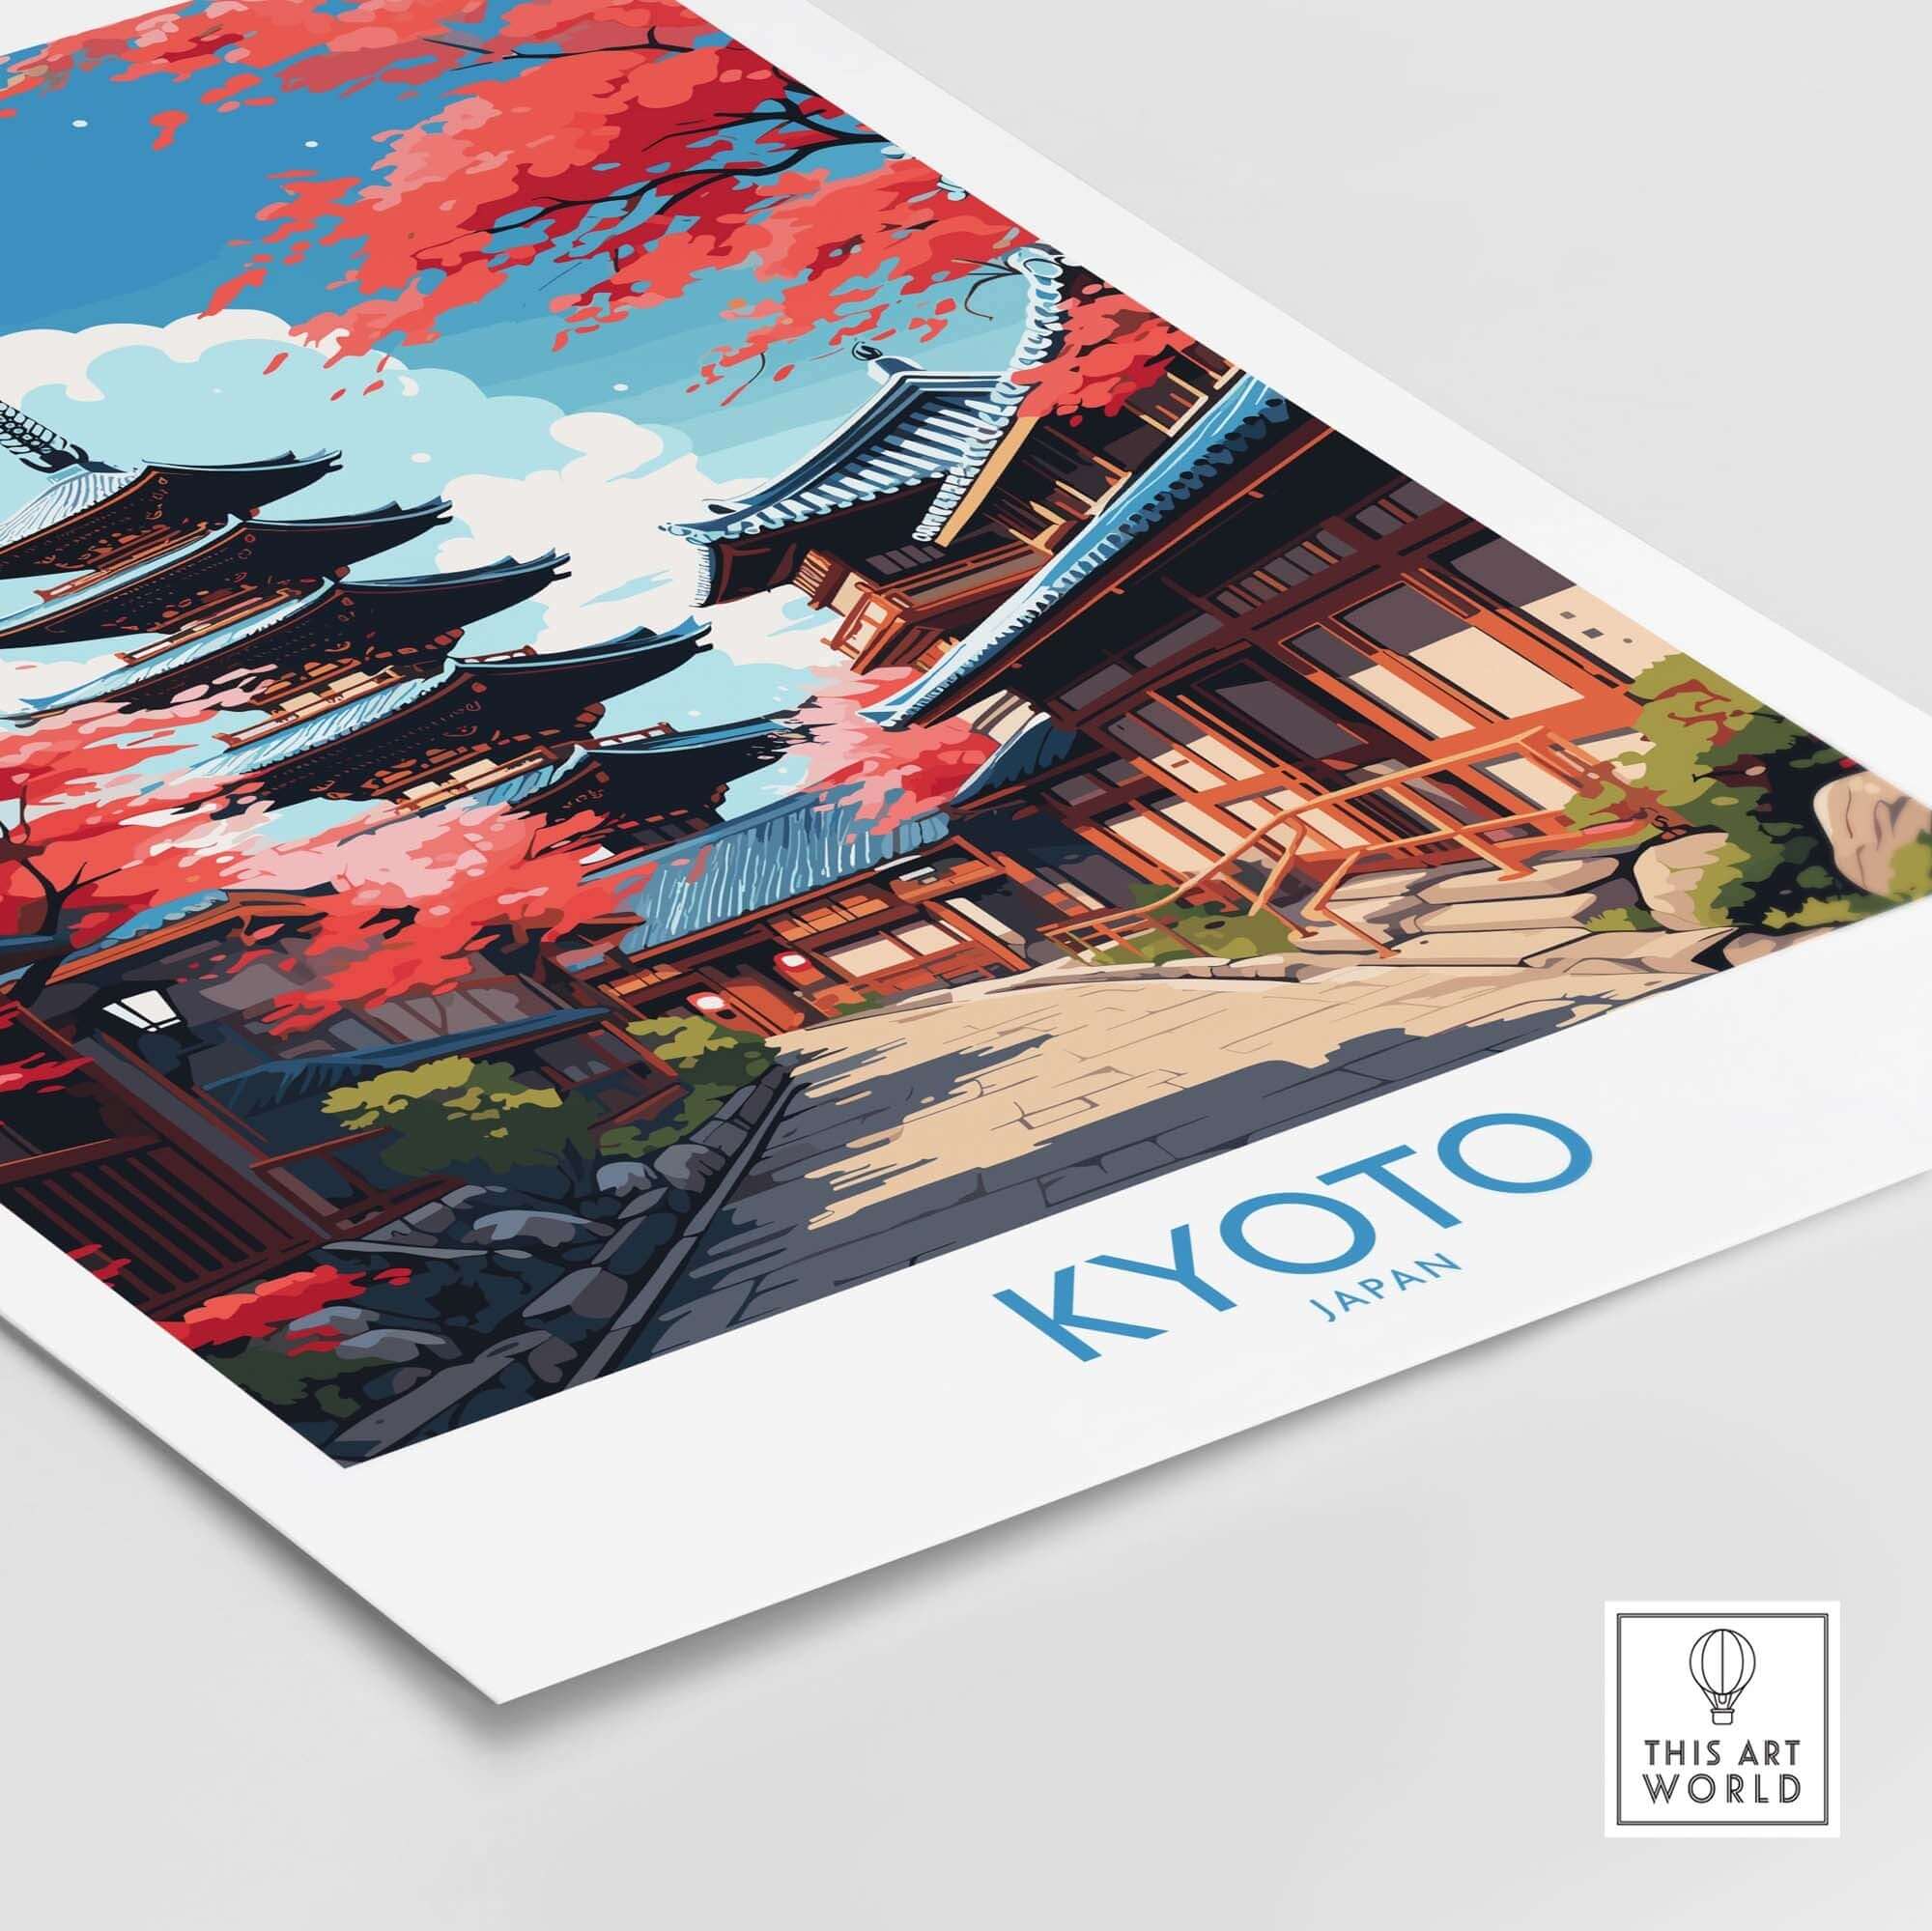 Kyoto Print